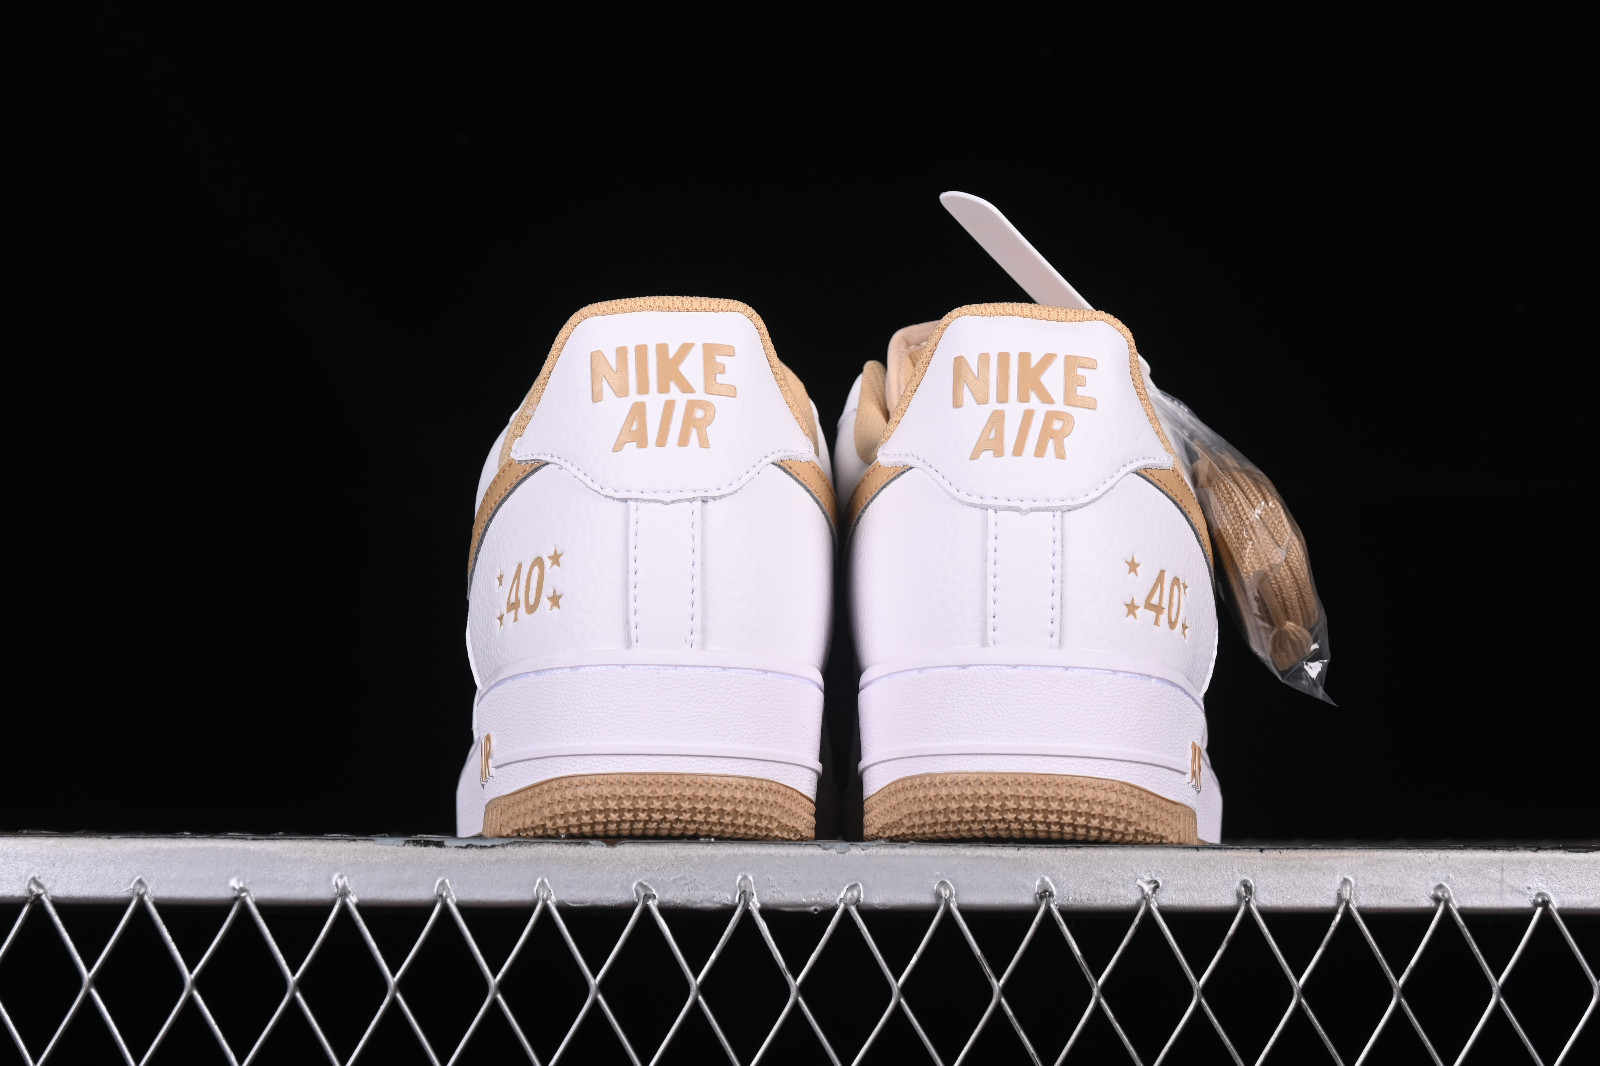 Nike White Air Force 1 '07 LV8 Metallic White Gold Sneakers